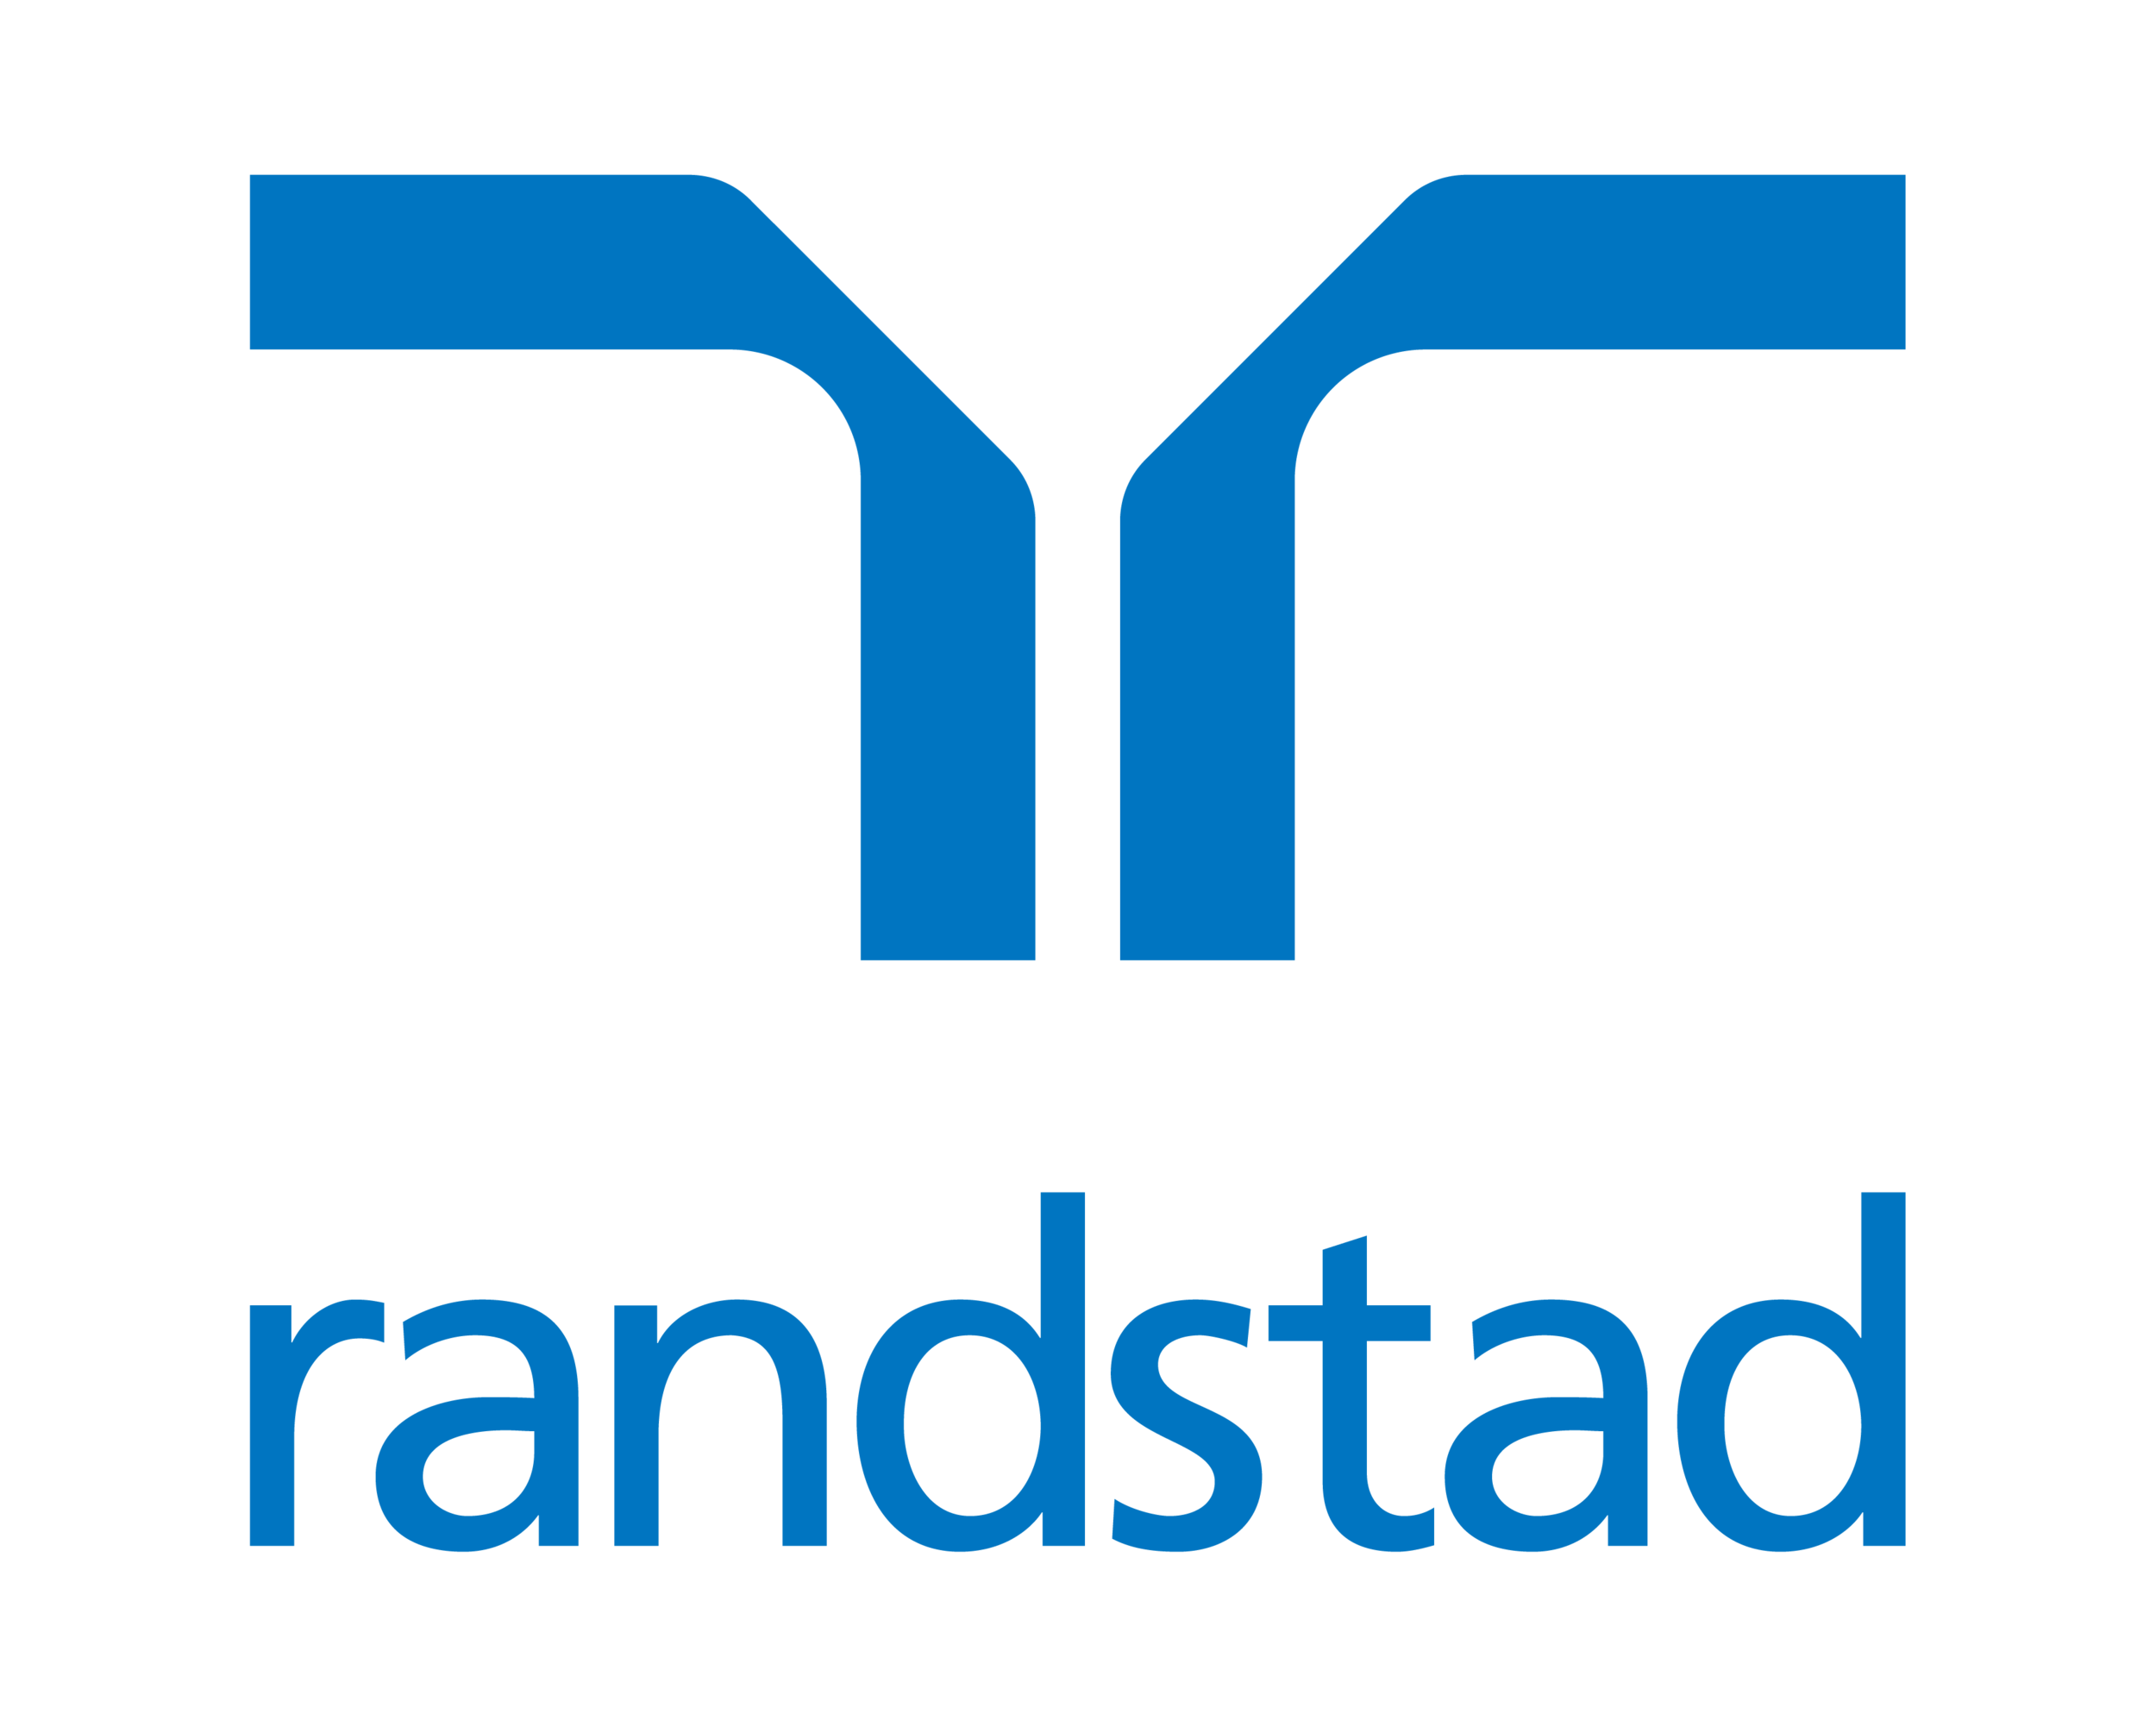 Randstad logo 2 - Elize Tai.png